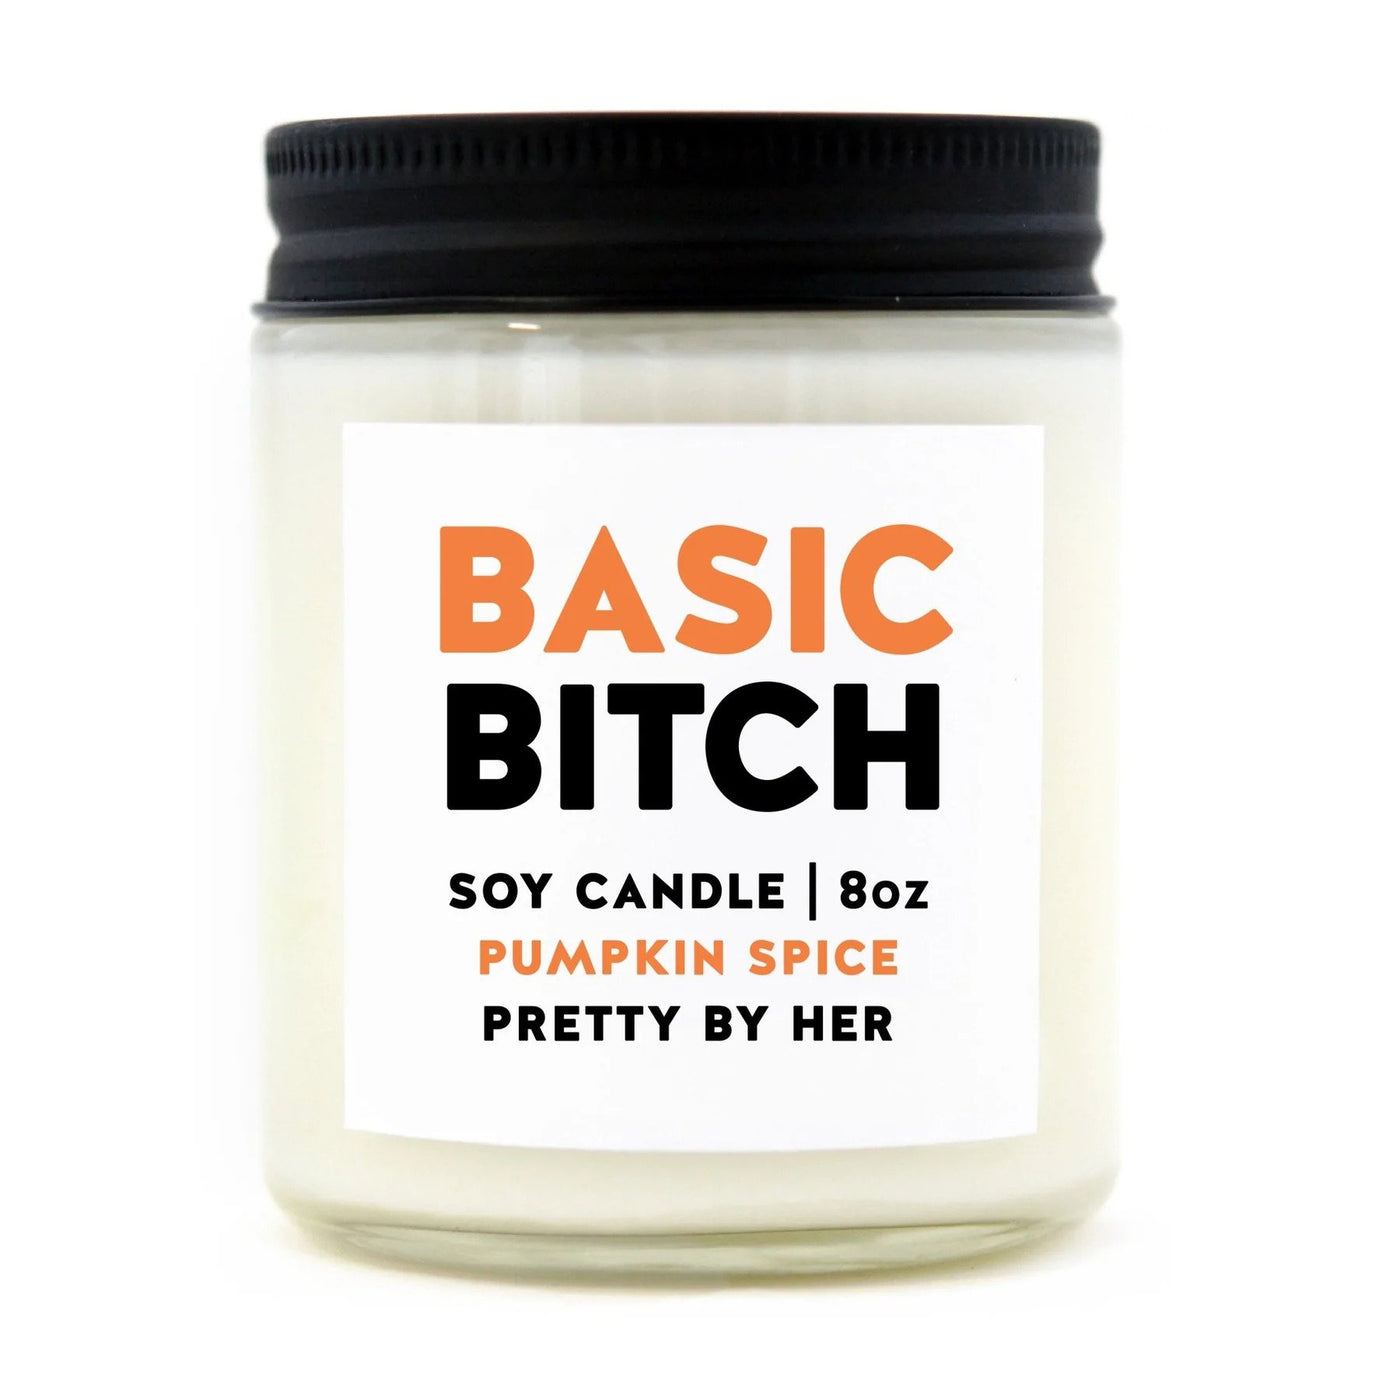 Basic Bitch Candle